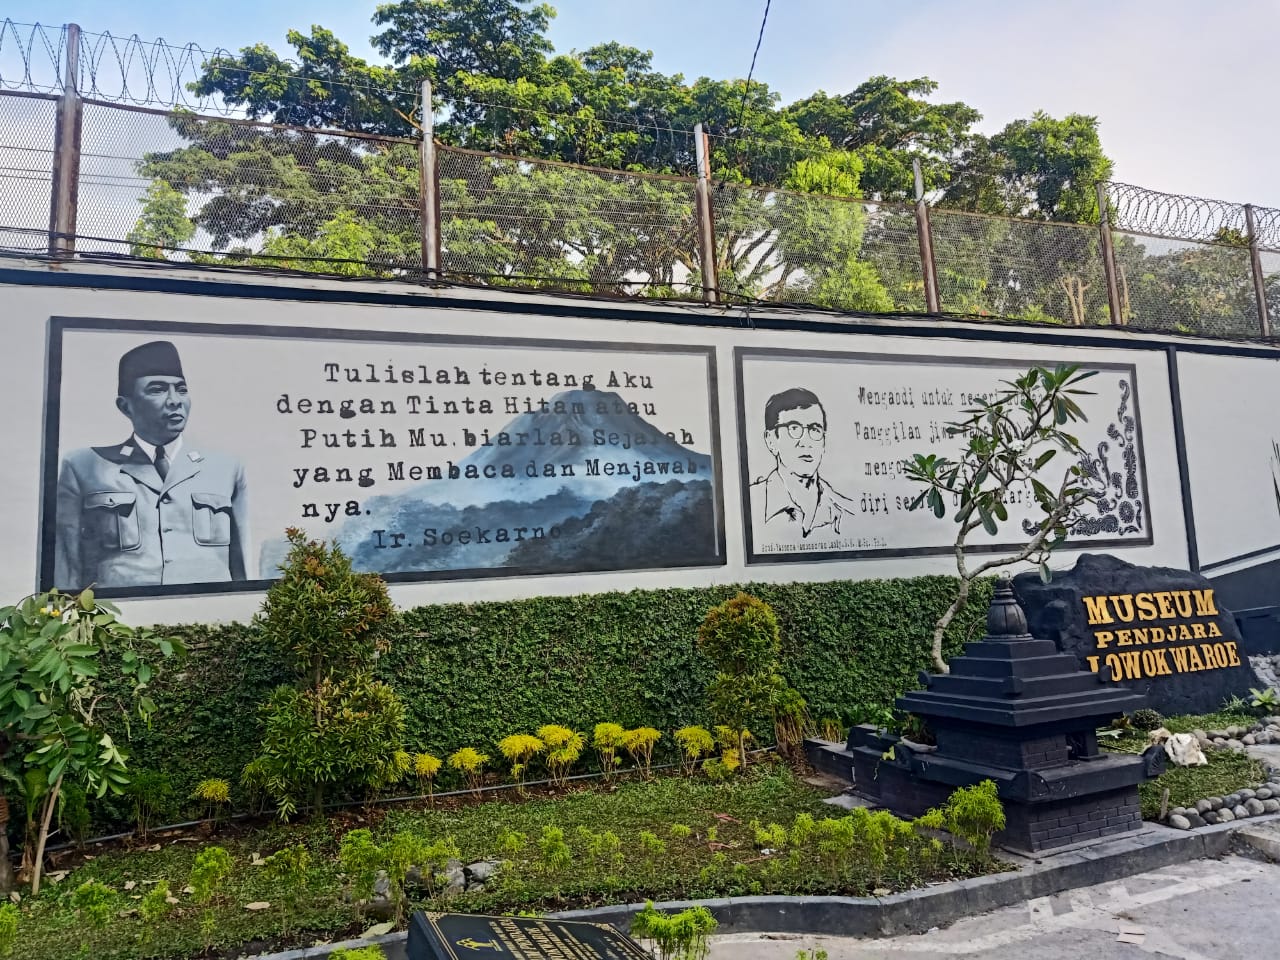 Dinding Museum Pendjara Lowokwaroe Malang Dipercantik Lukisan Soekarno